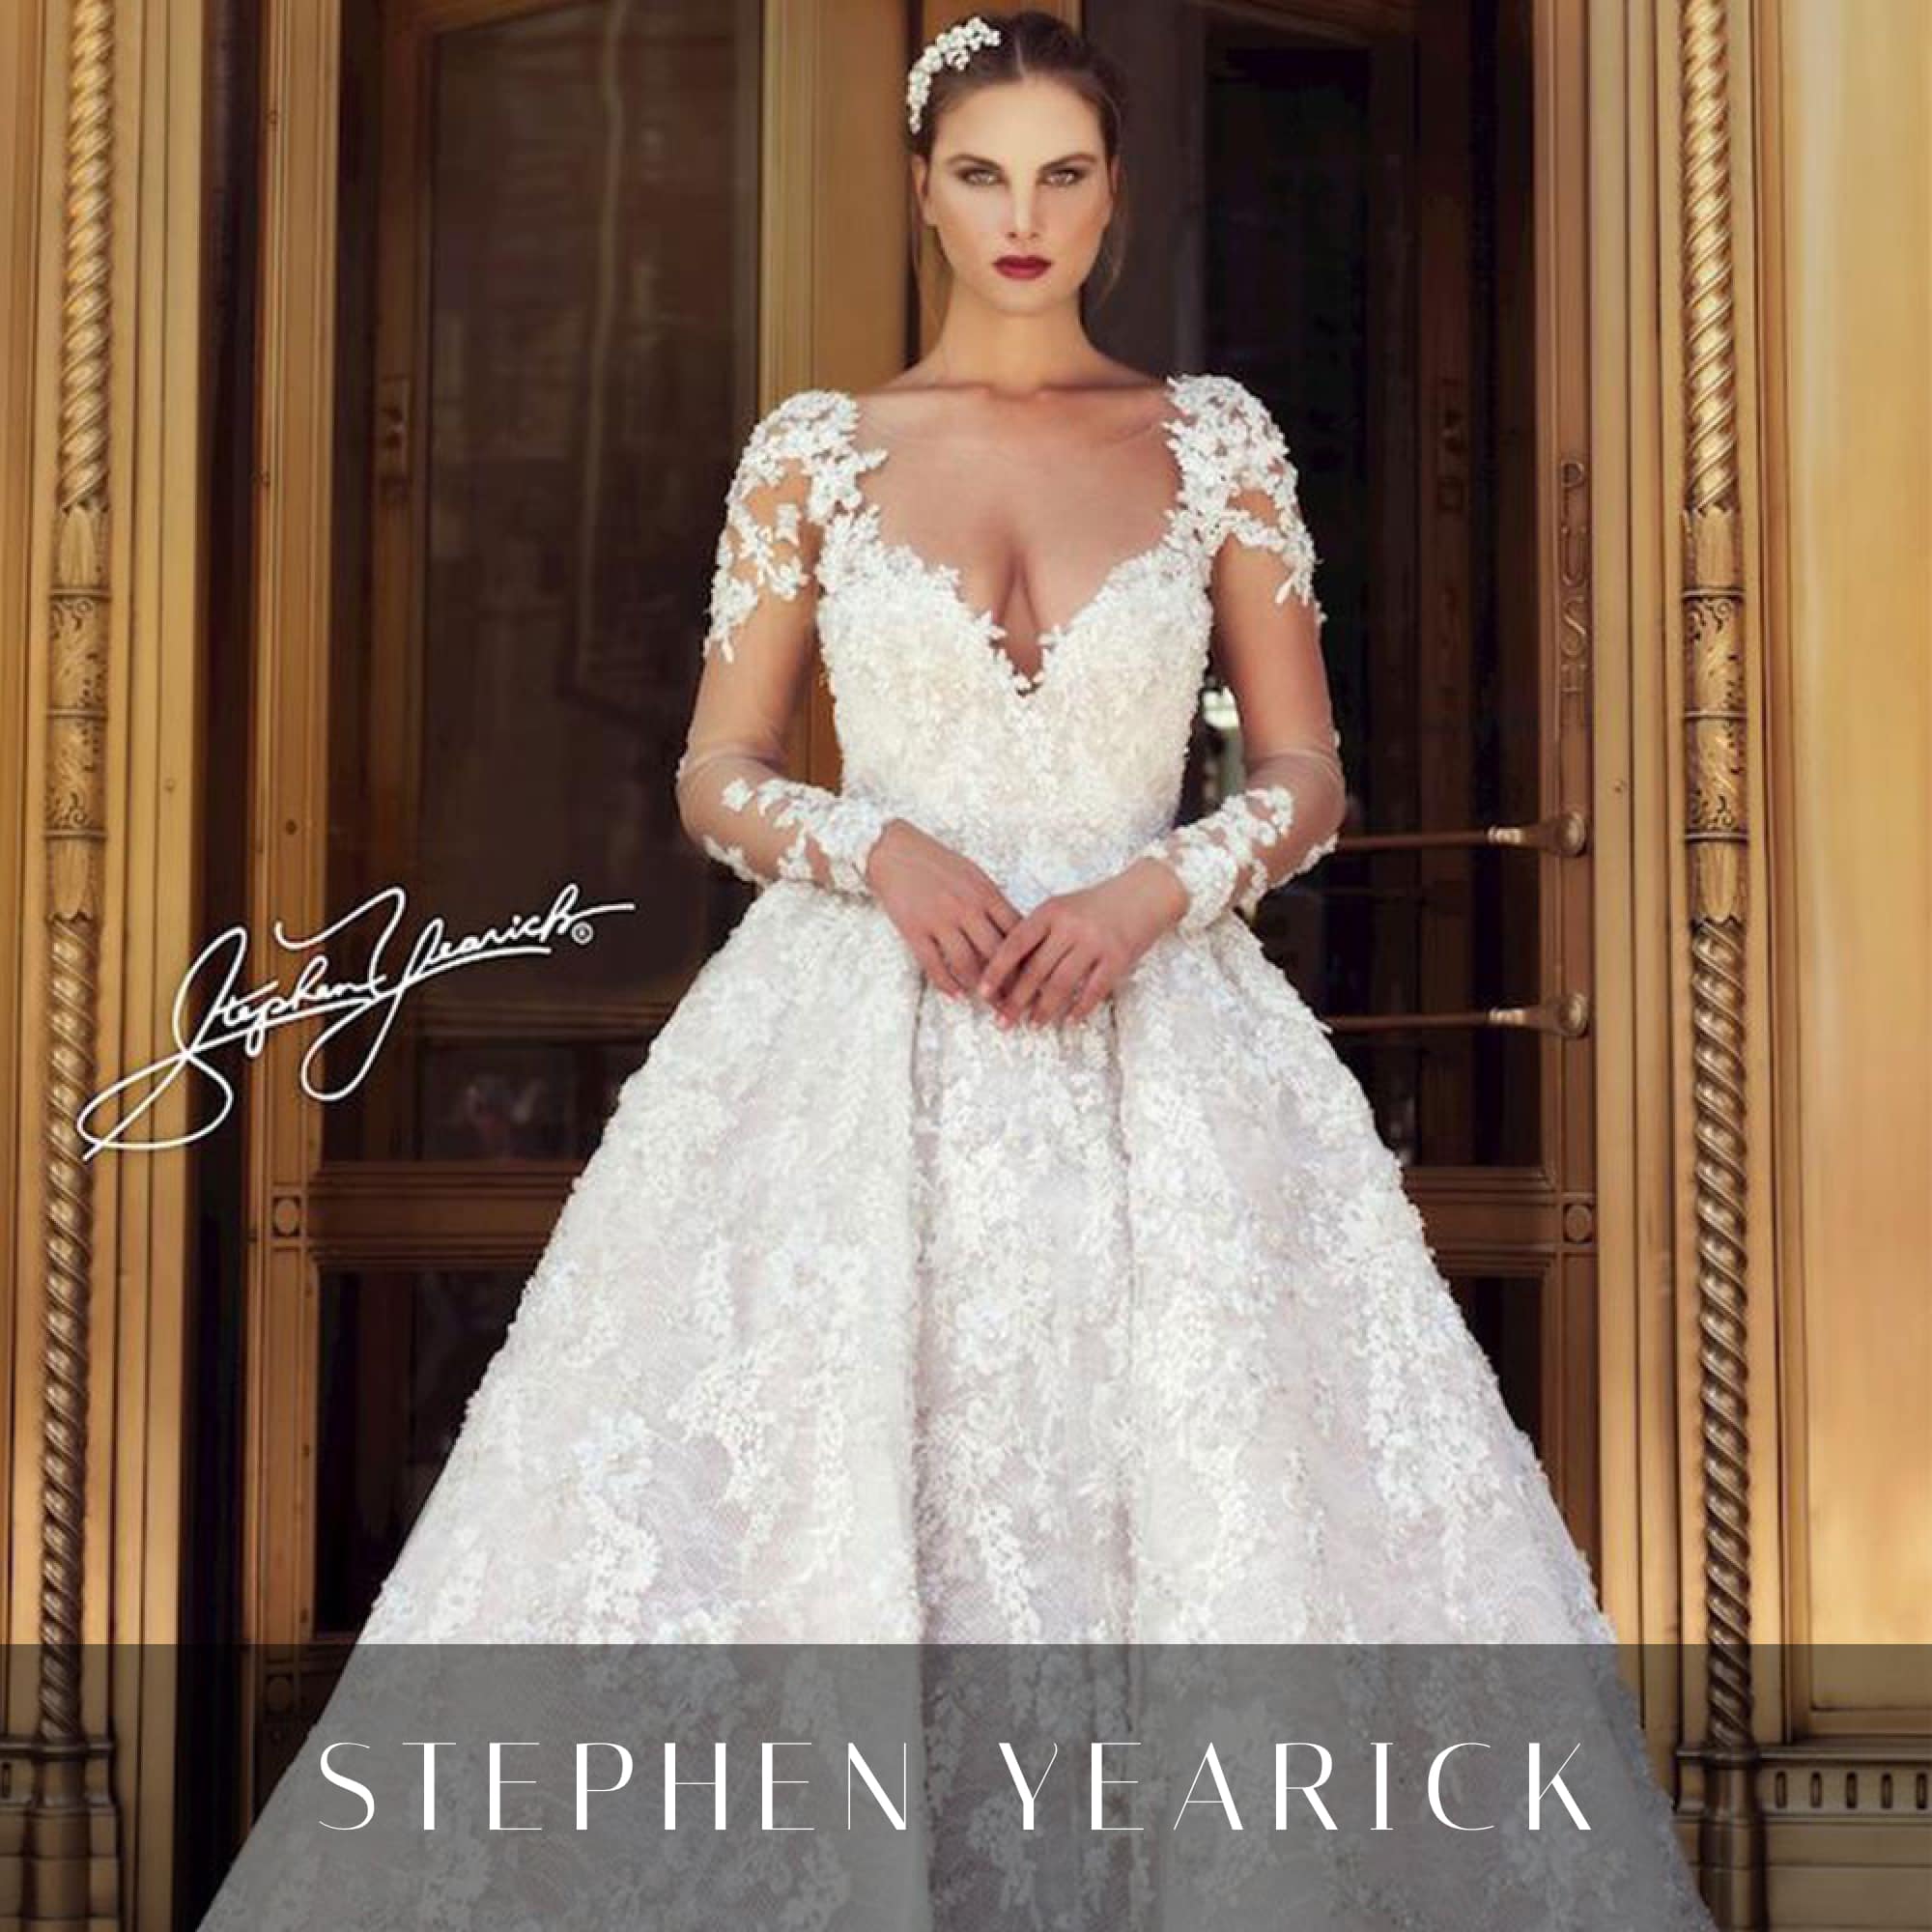 Stephen Yearick Wedding Dresses